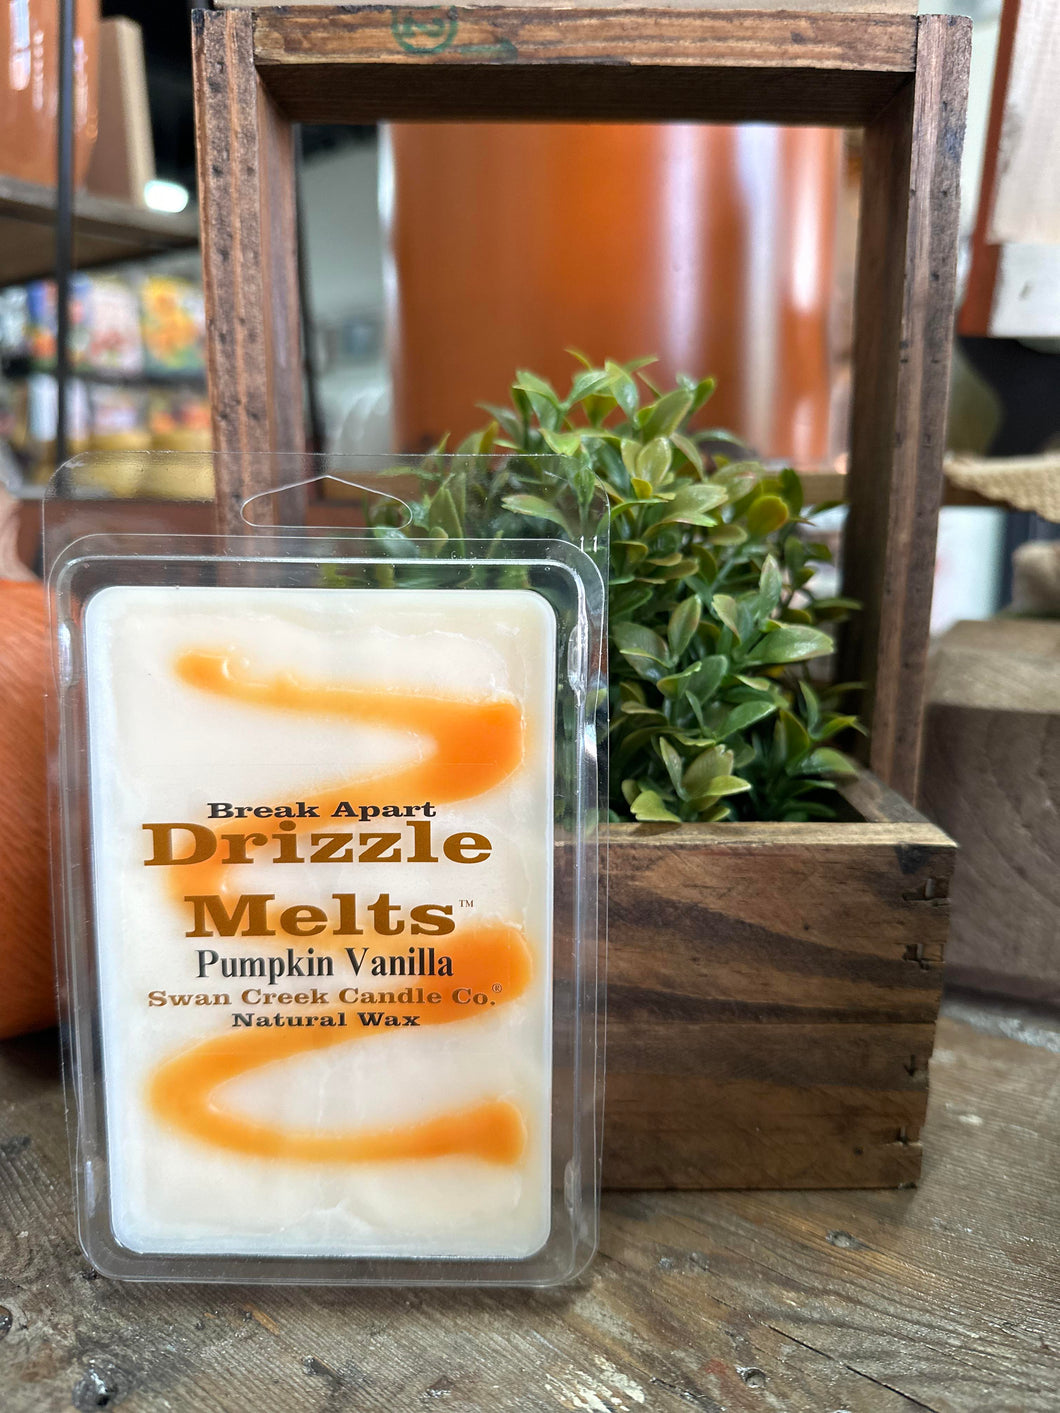 Swan Creek Candle Co. Pumpkin Vanilla Drizzle Melts